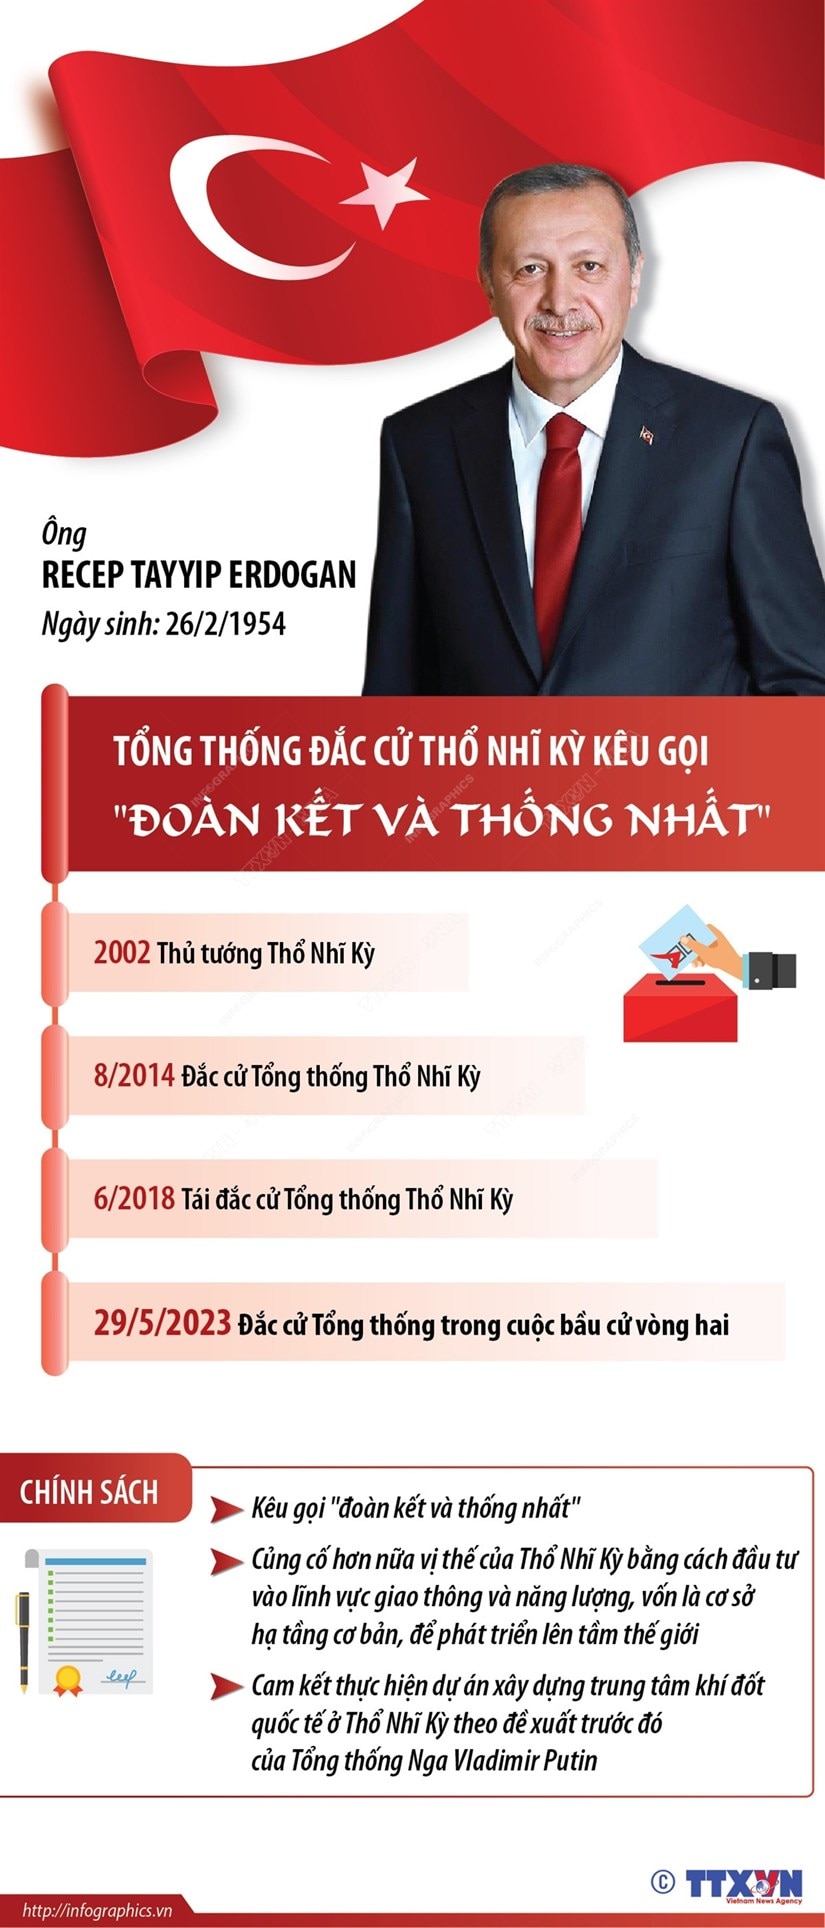 Tong thong Tho Nhi Ky Erdogan keu goi 